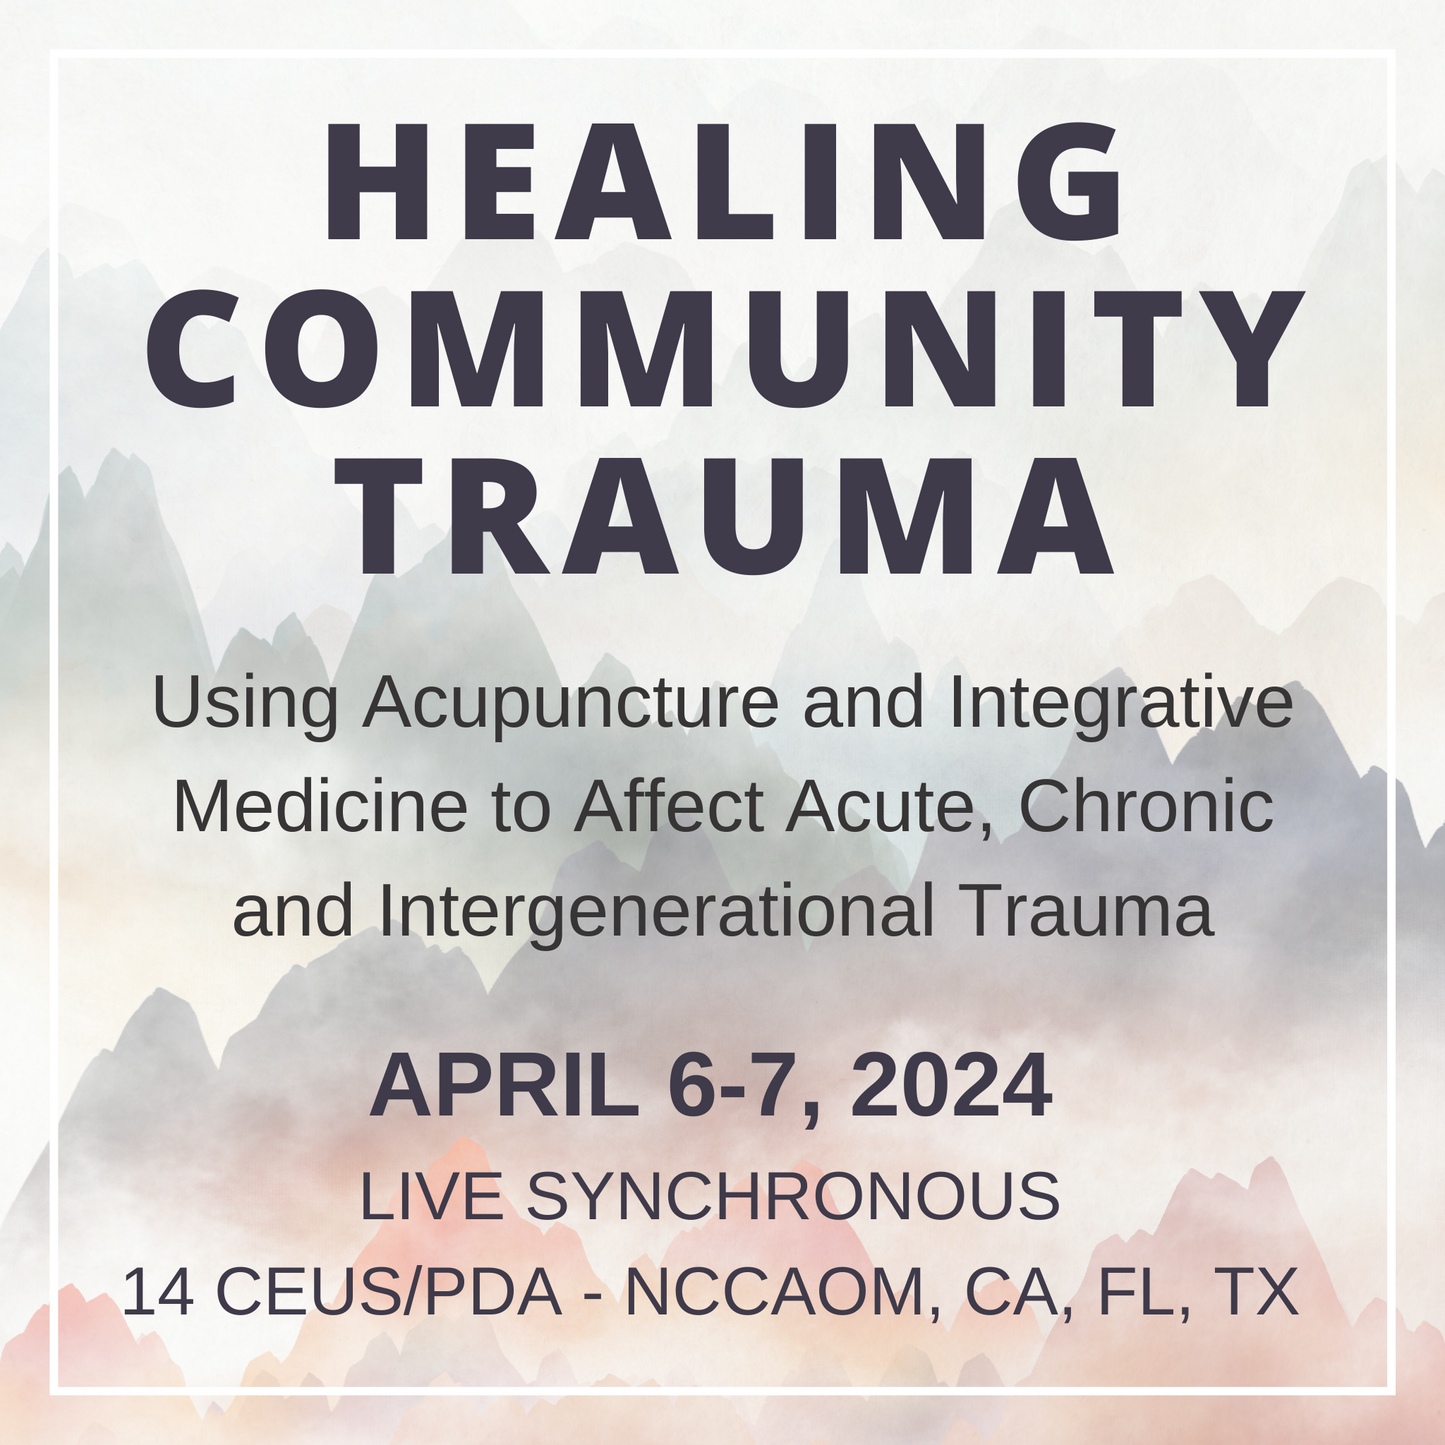 Healing Community Trauma | April 6-7, 2024 | Live Synchronous